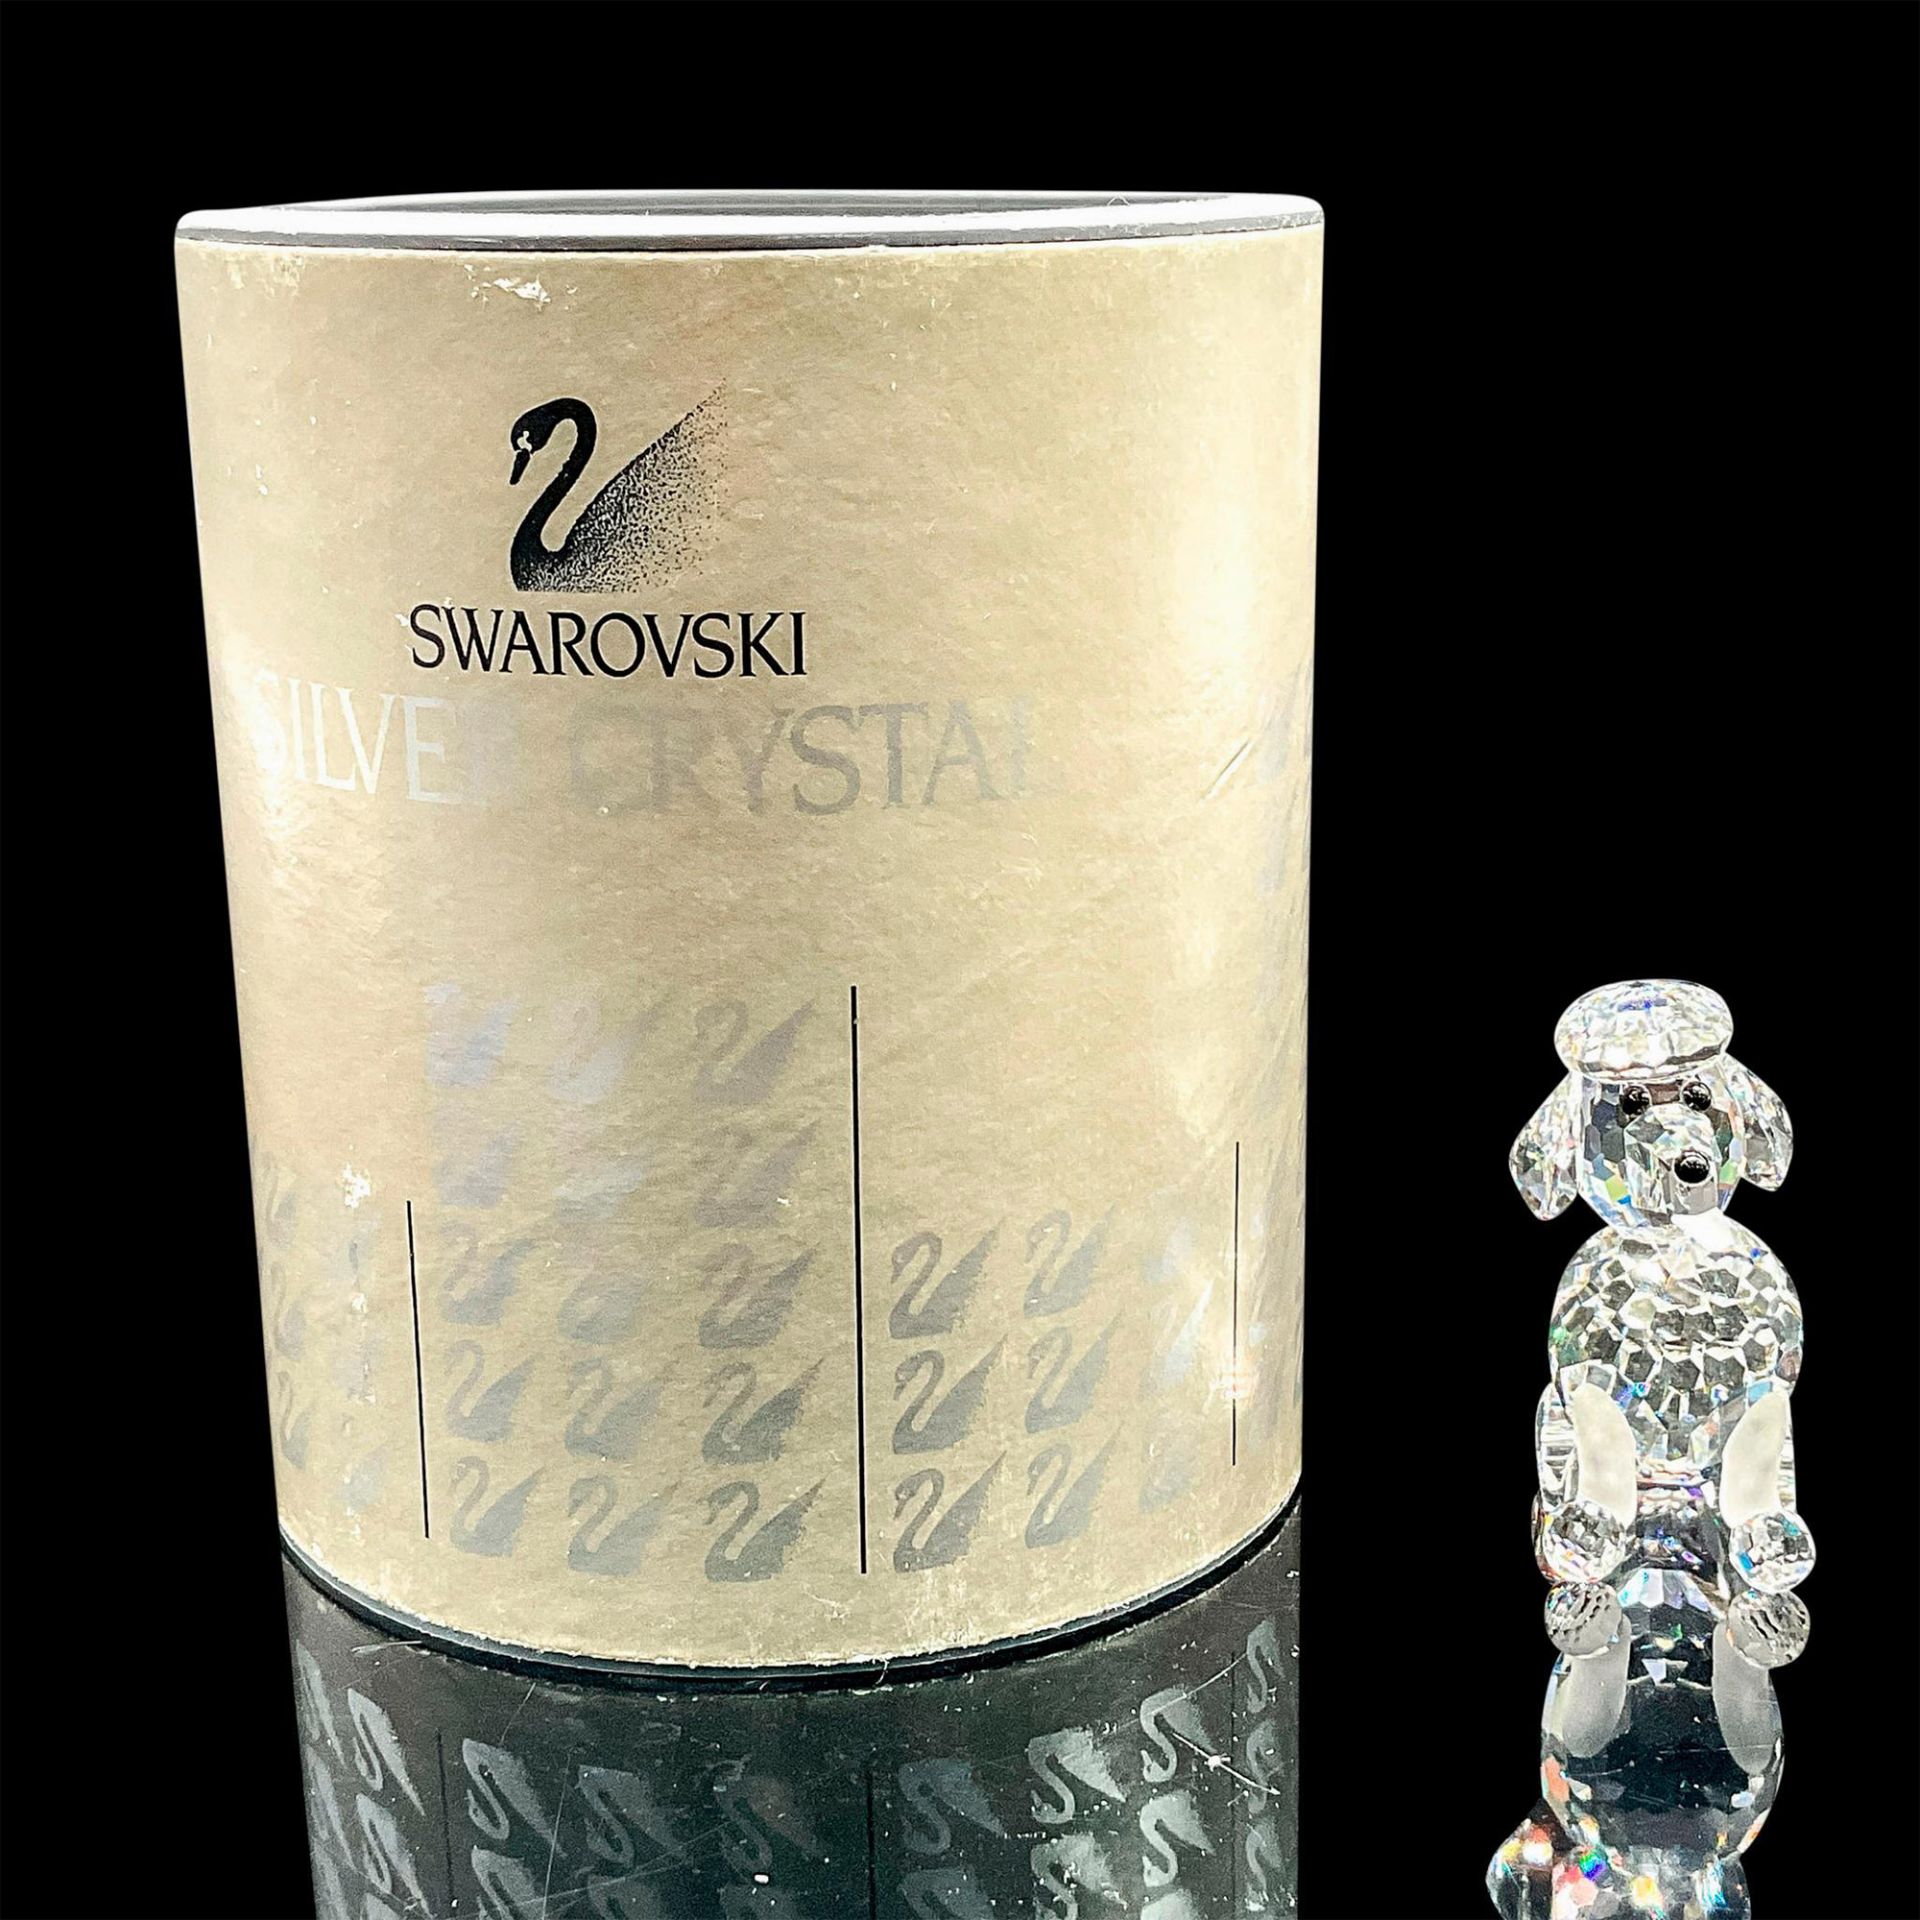 Swarovski Silver Crystal Figurine, Sitting Poodle - Image 5 of 5